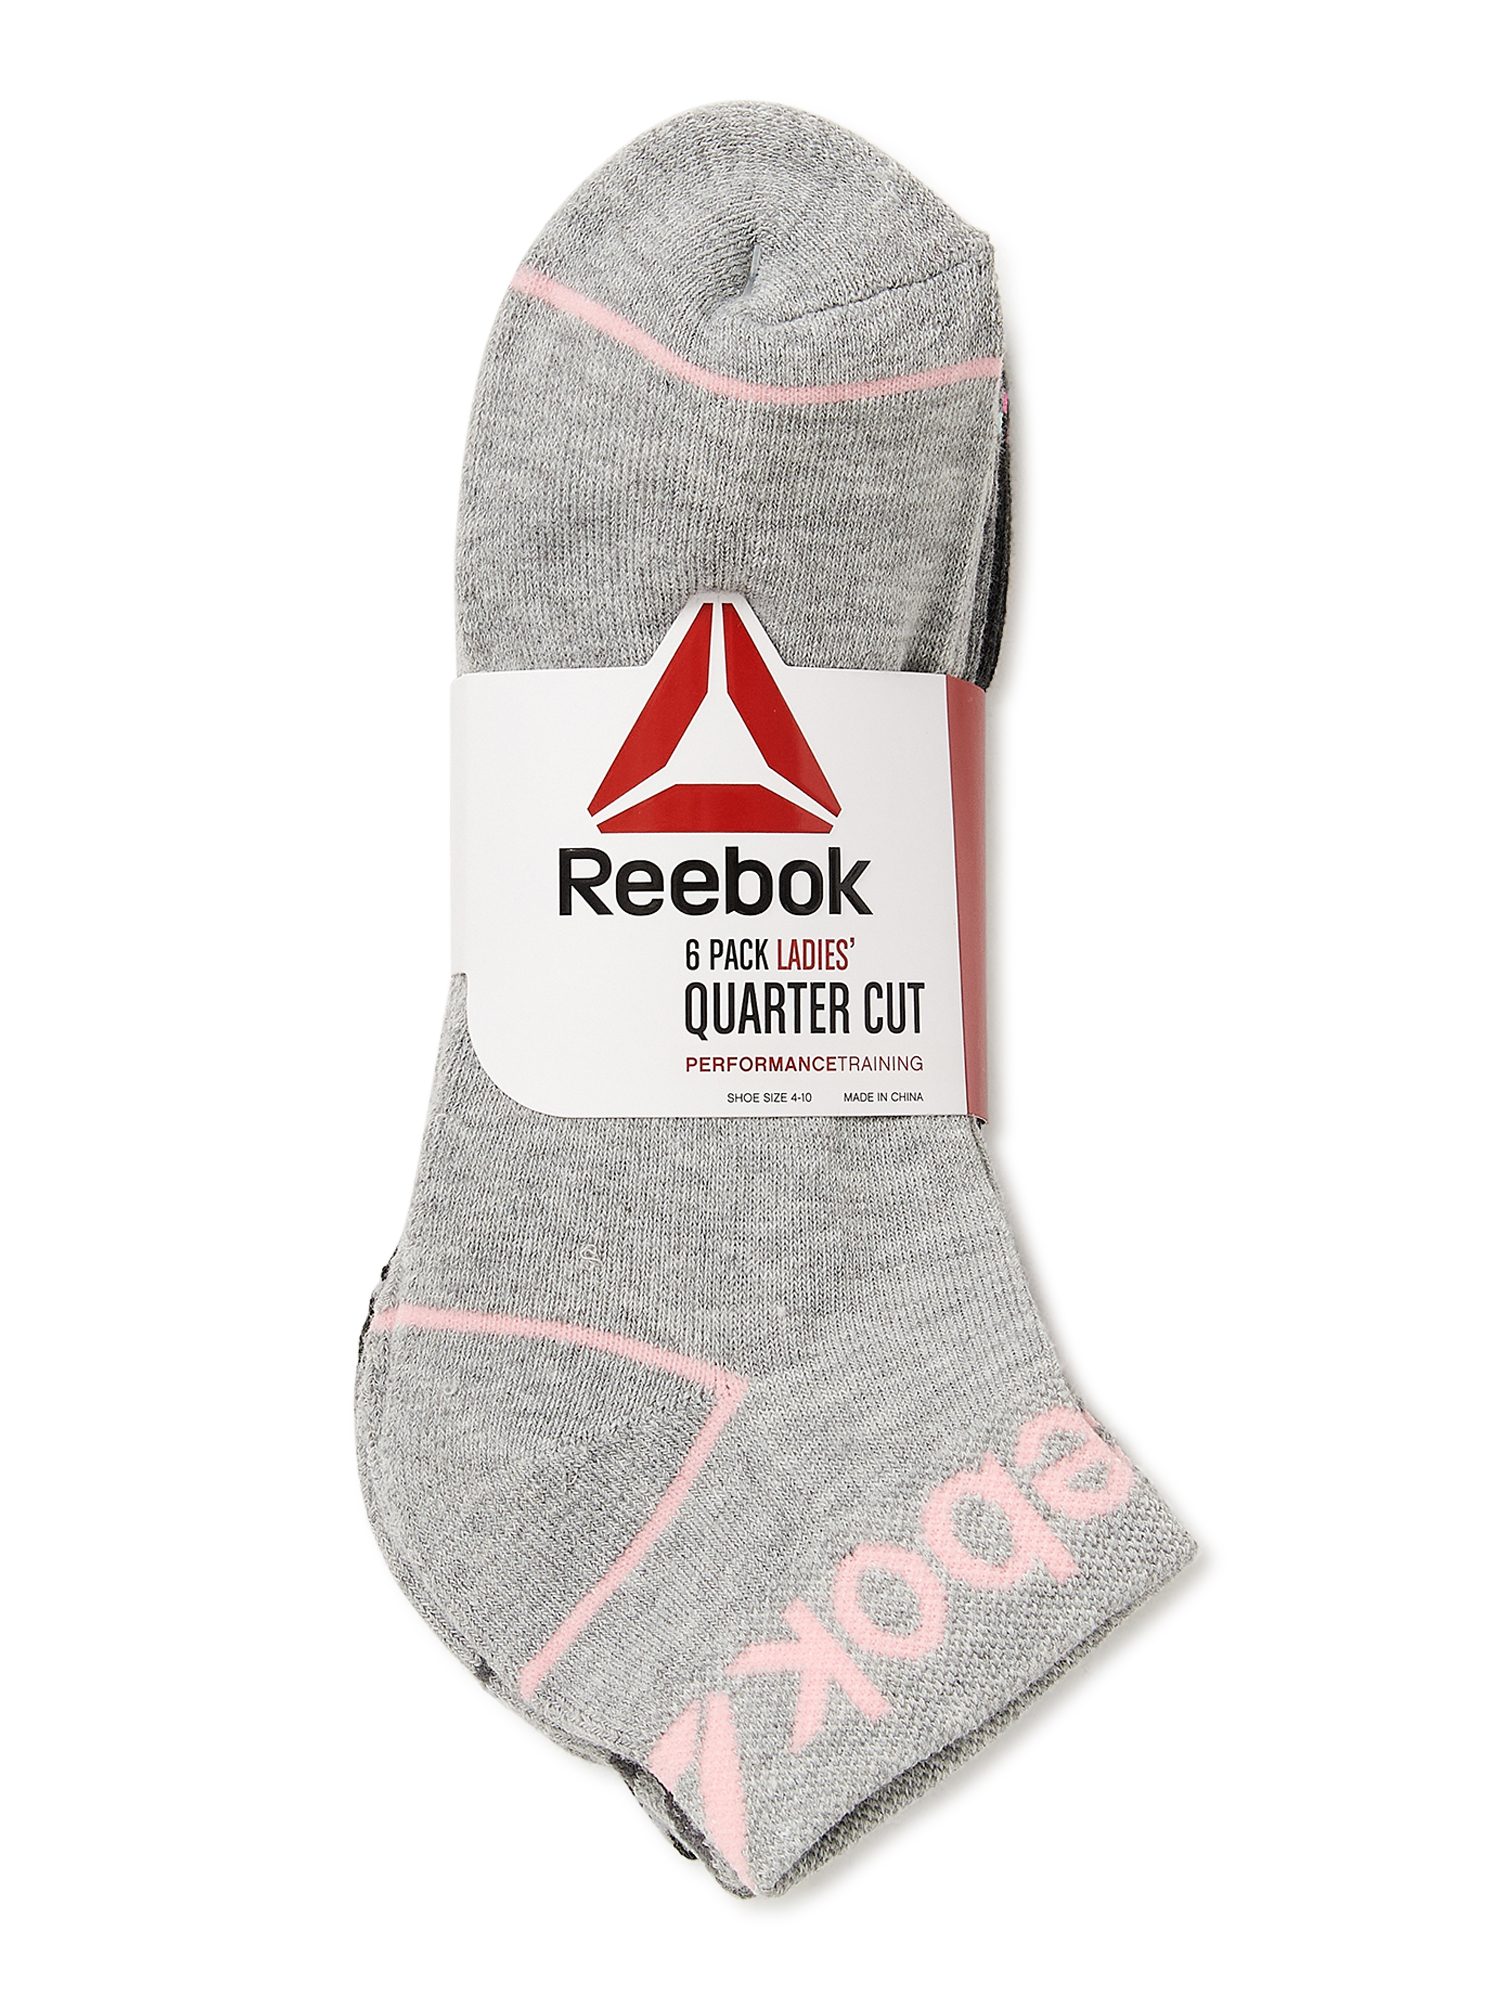 Reebok Women's Cushion Quarter Socks, 6-Pack - image 5 of 9